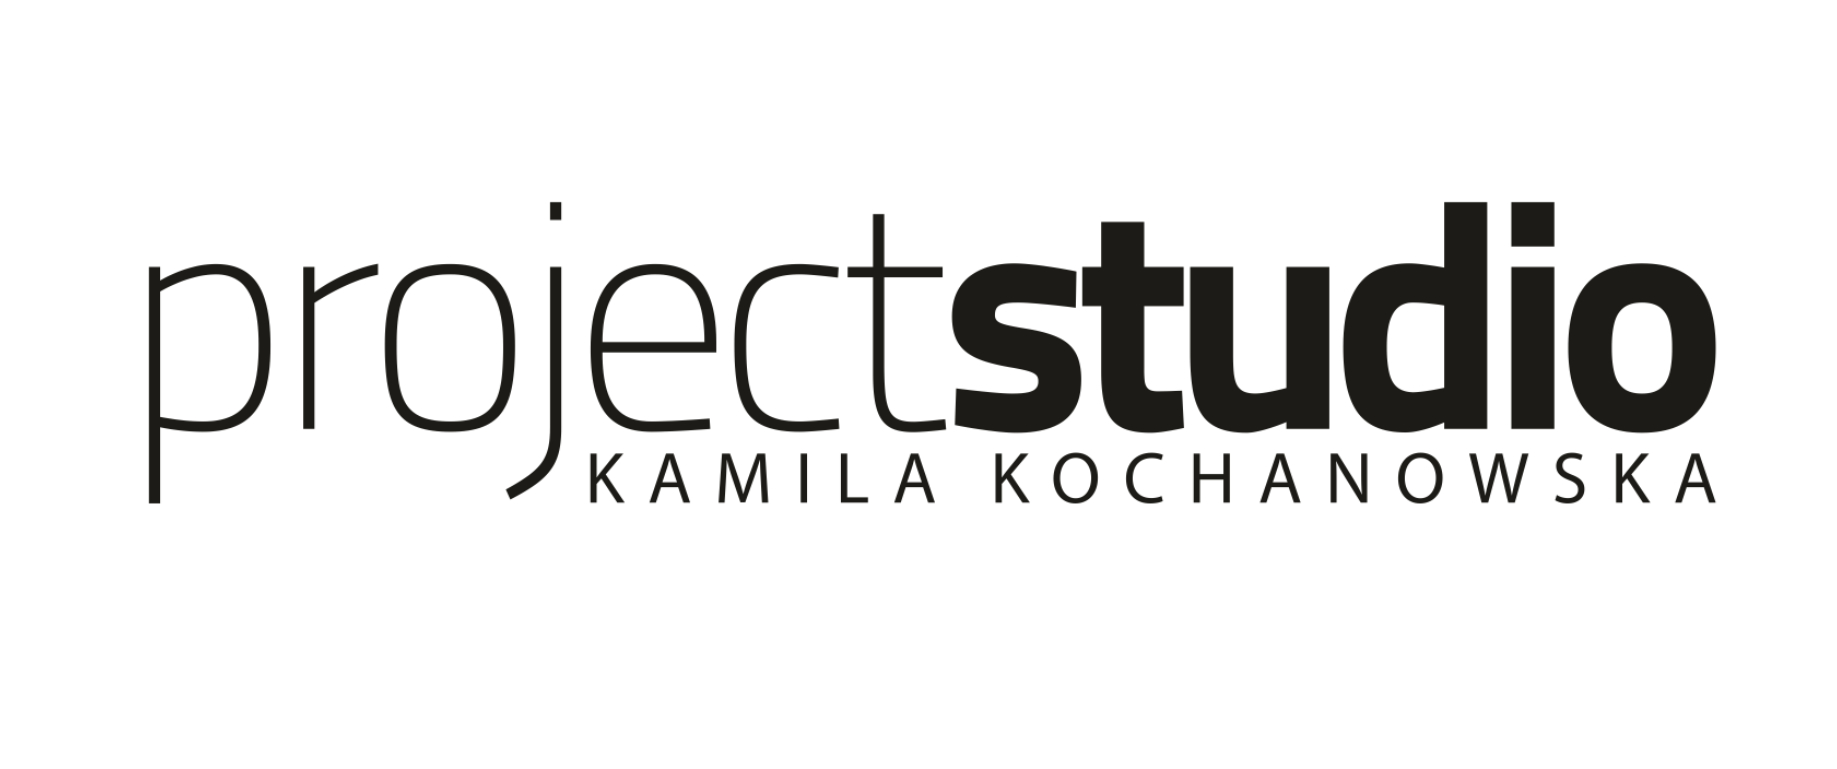 Project Studio Kamila Kochanowska